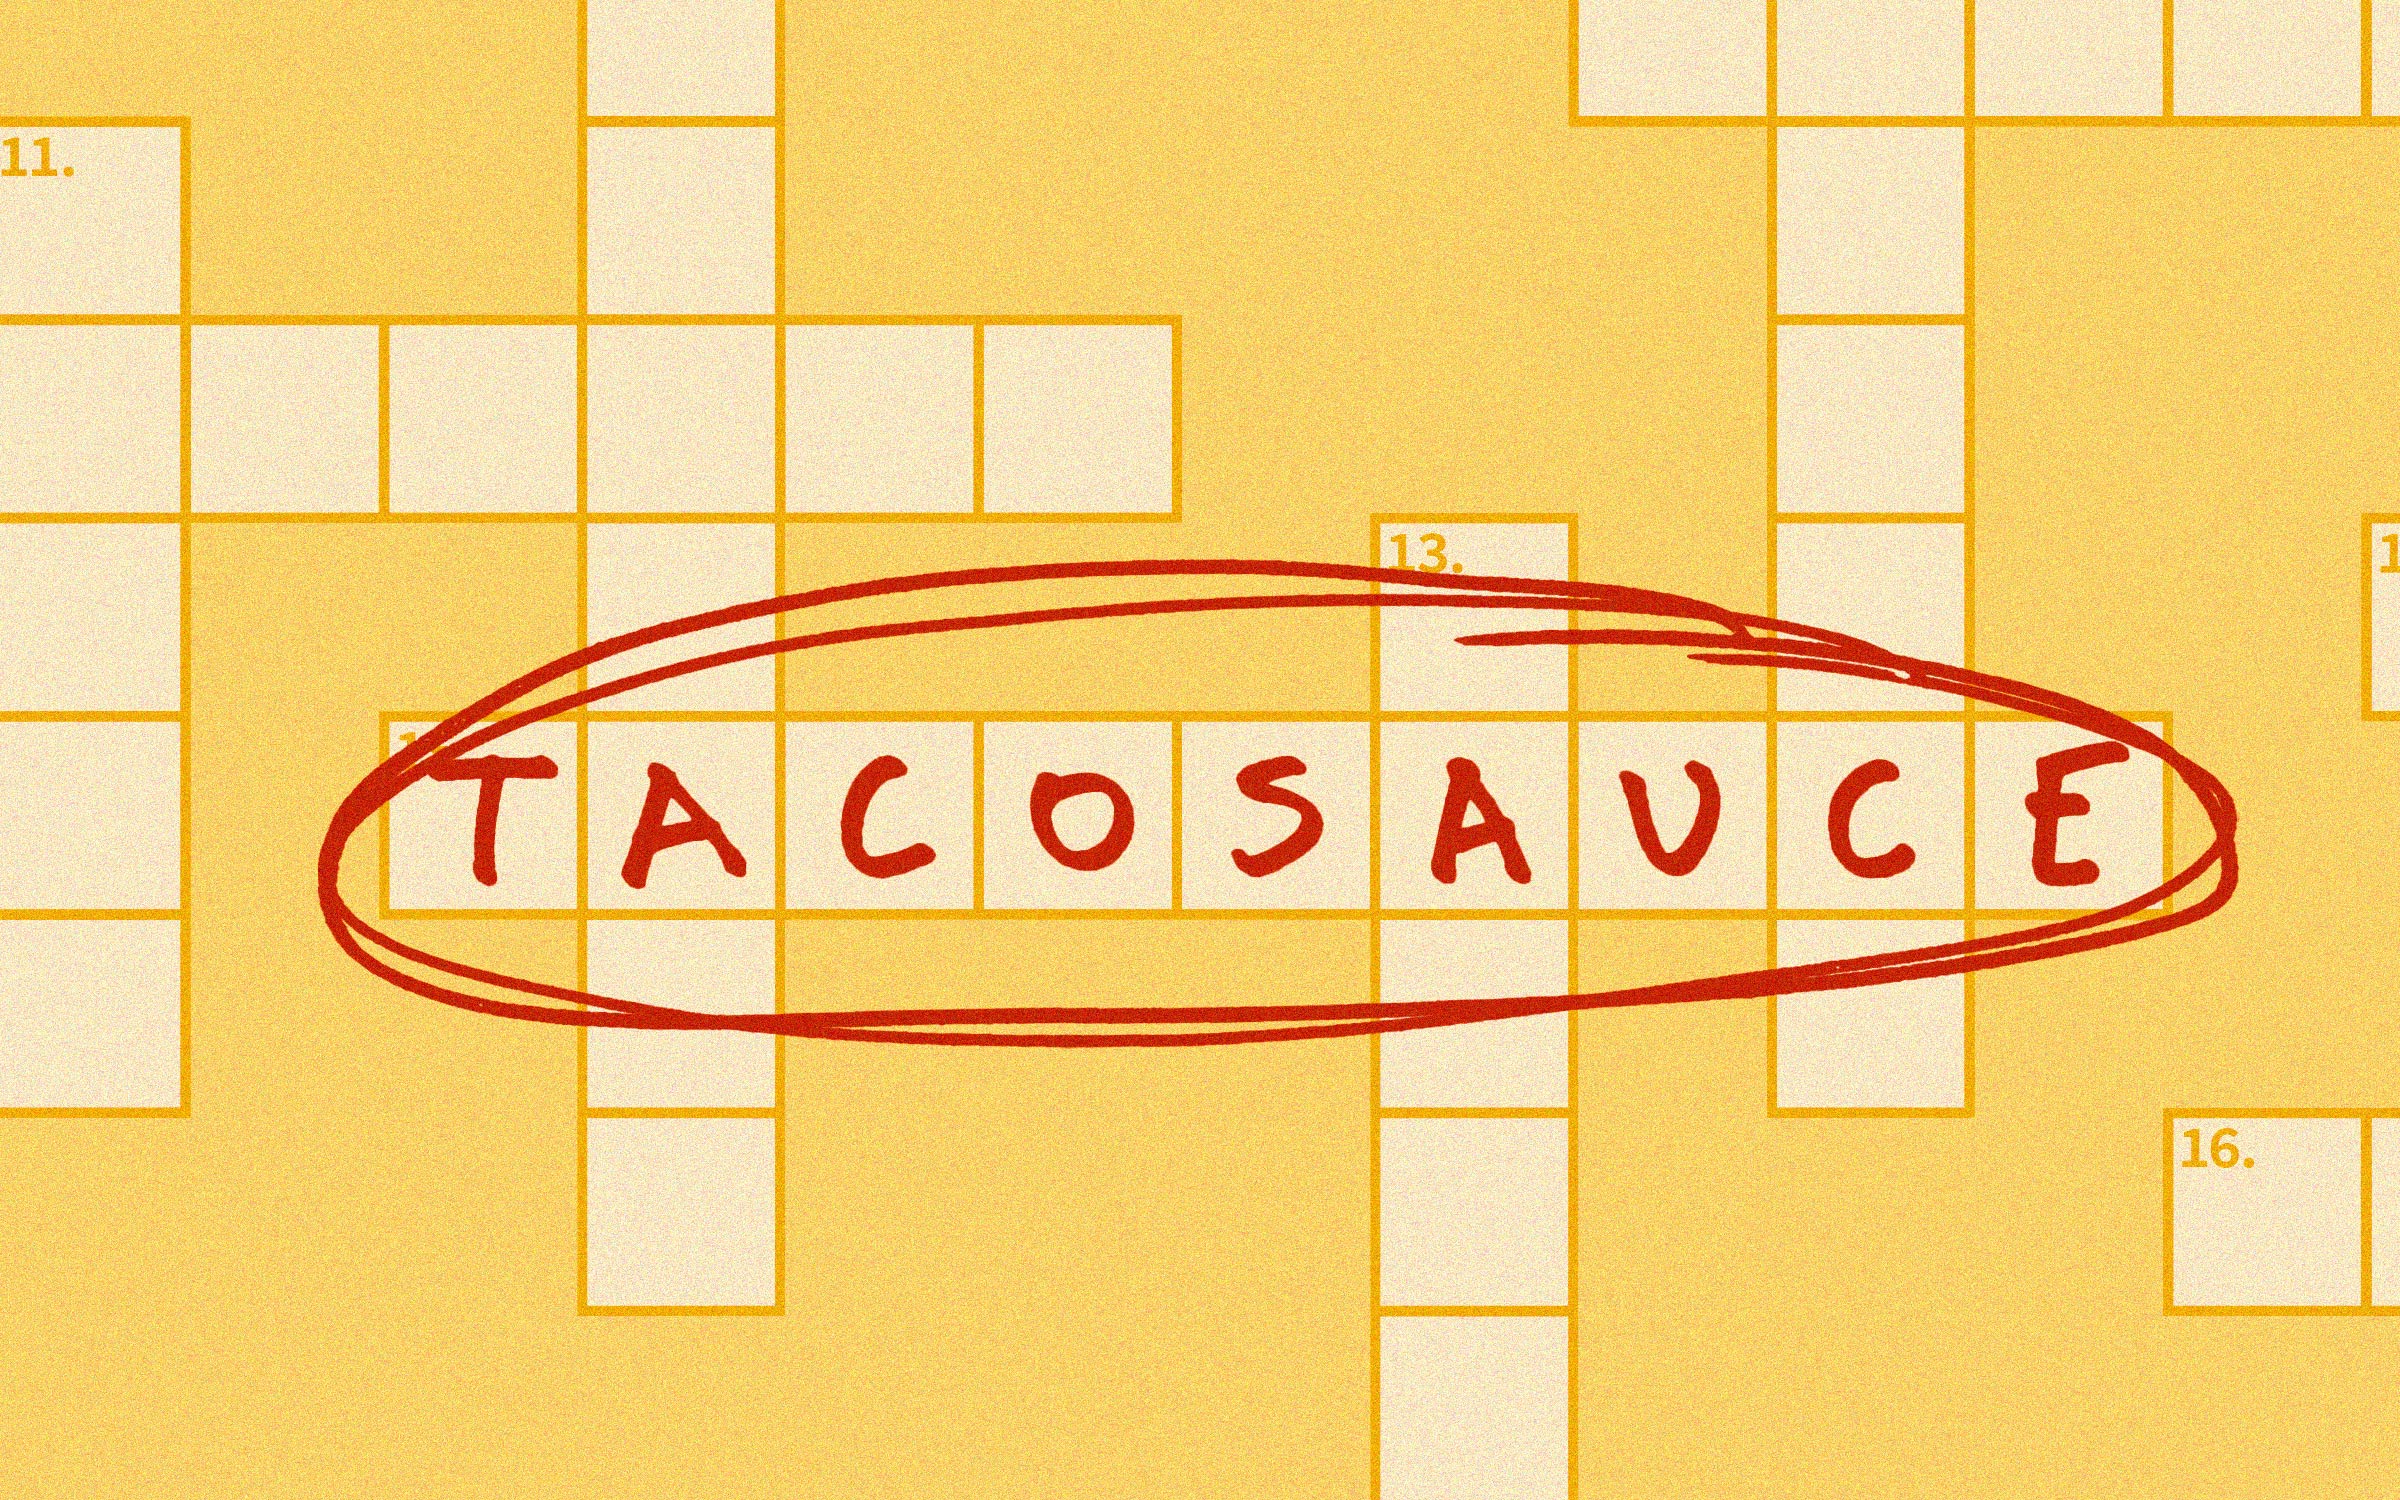 Arctic, e.g - Crossword Clue Answers - Crossword Solver